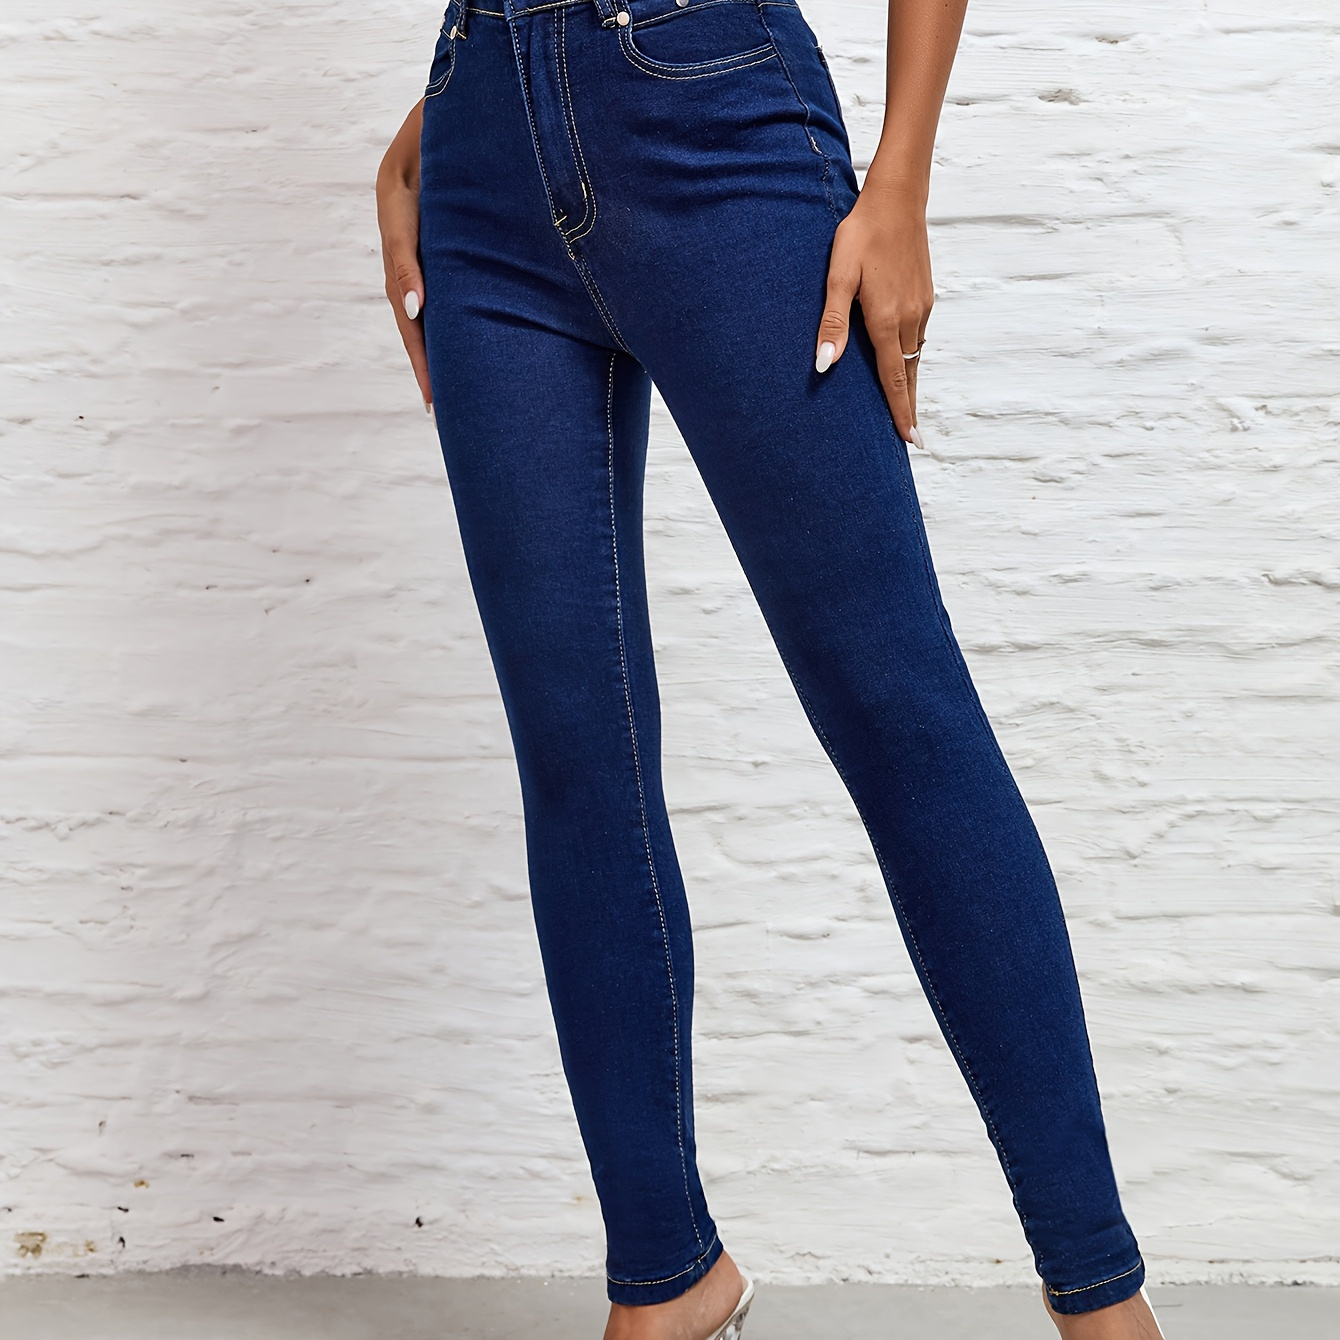 

Deep Blue Stretchy High Waist Denim Pants, Slash Pocket Sexy Classic Skinny Jeans, Women's Denim Jeans & Clothing